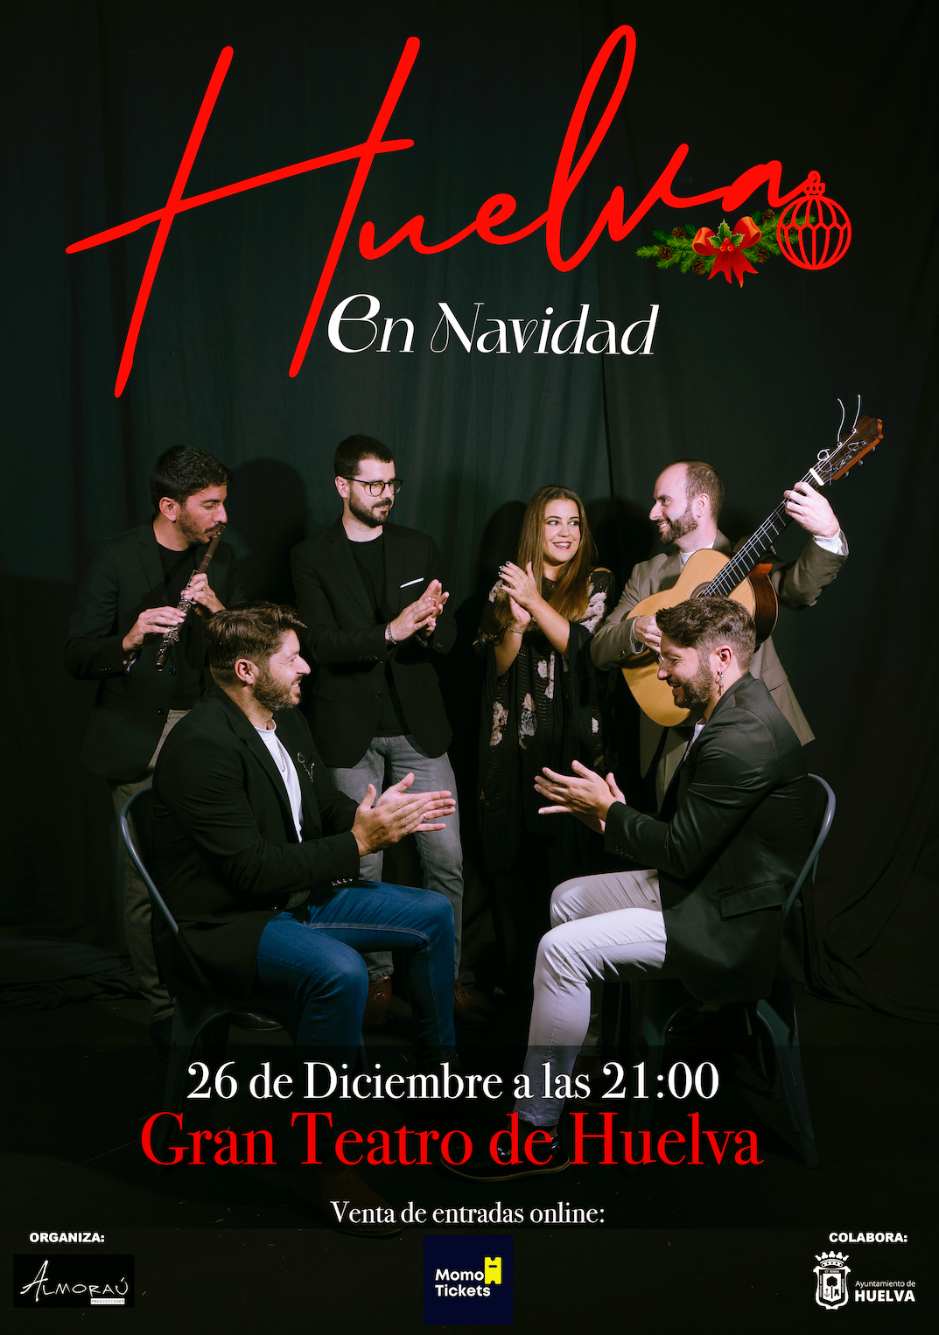 Huelva en Navidad